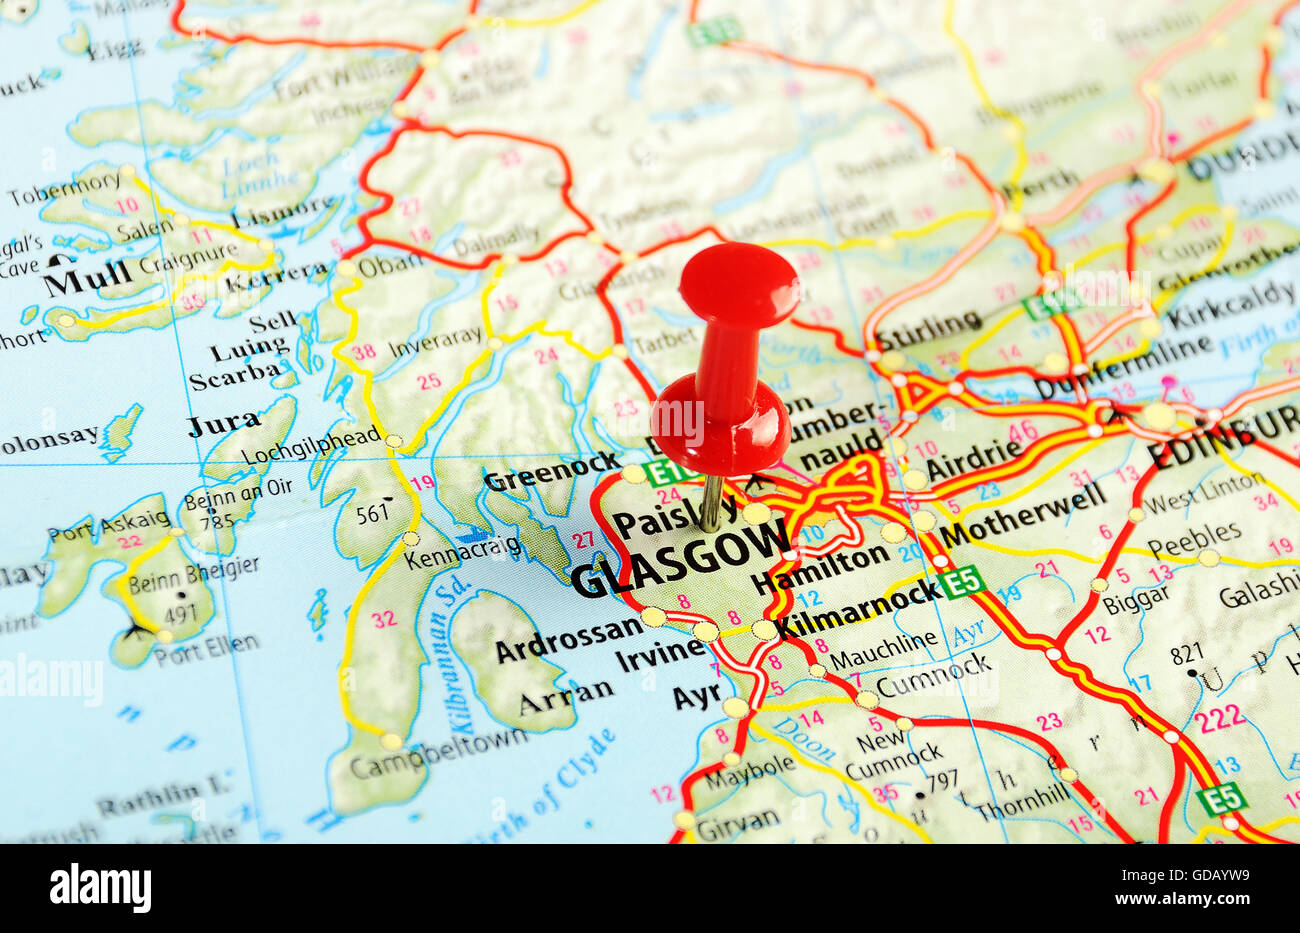 Glasgow Scotland  ,United Kingdom  map  and  pin - Travel concept Stock Photo